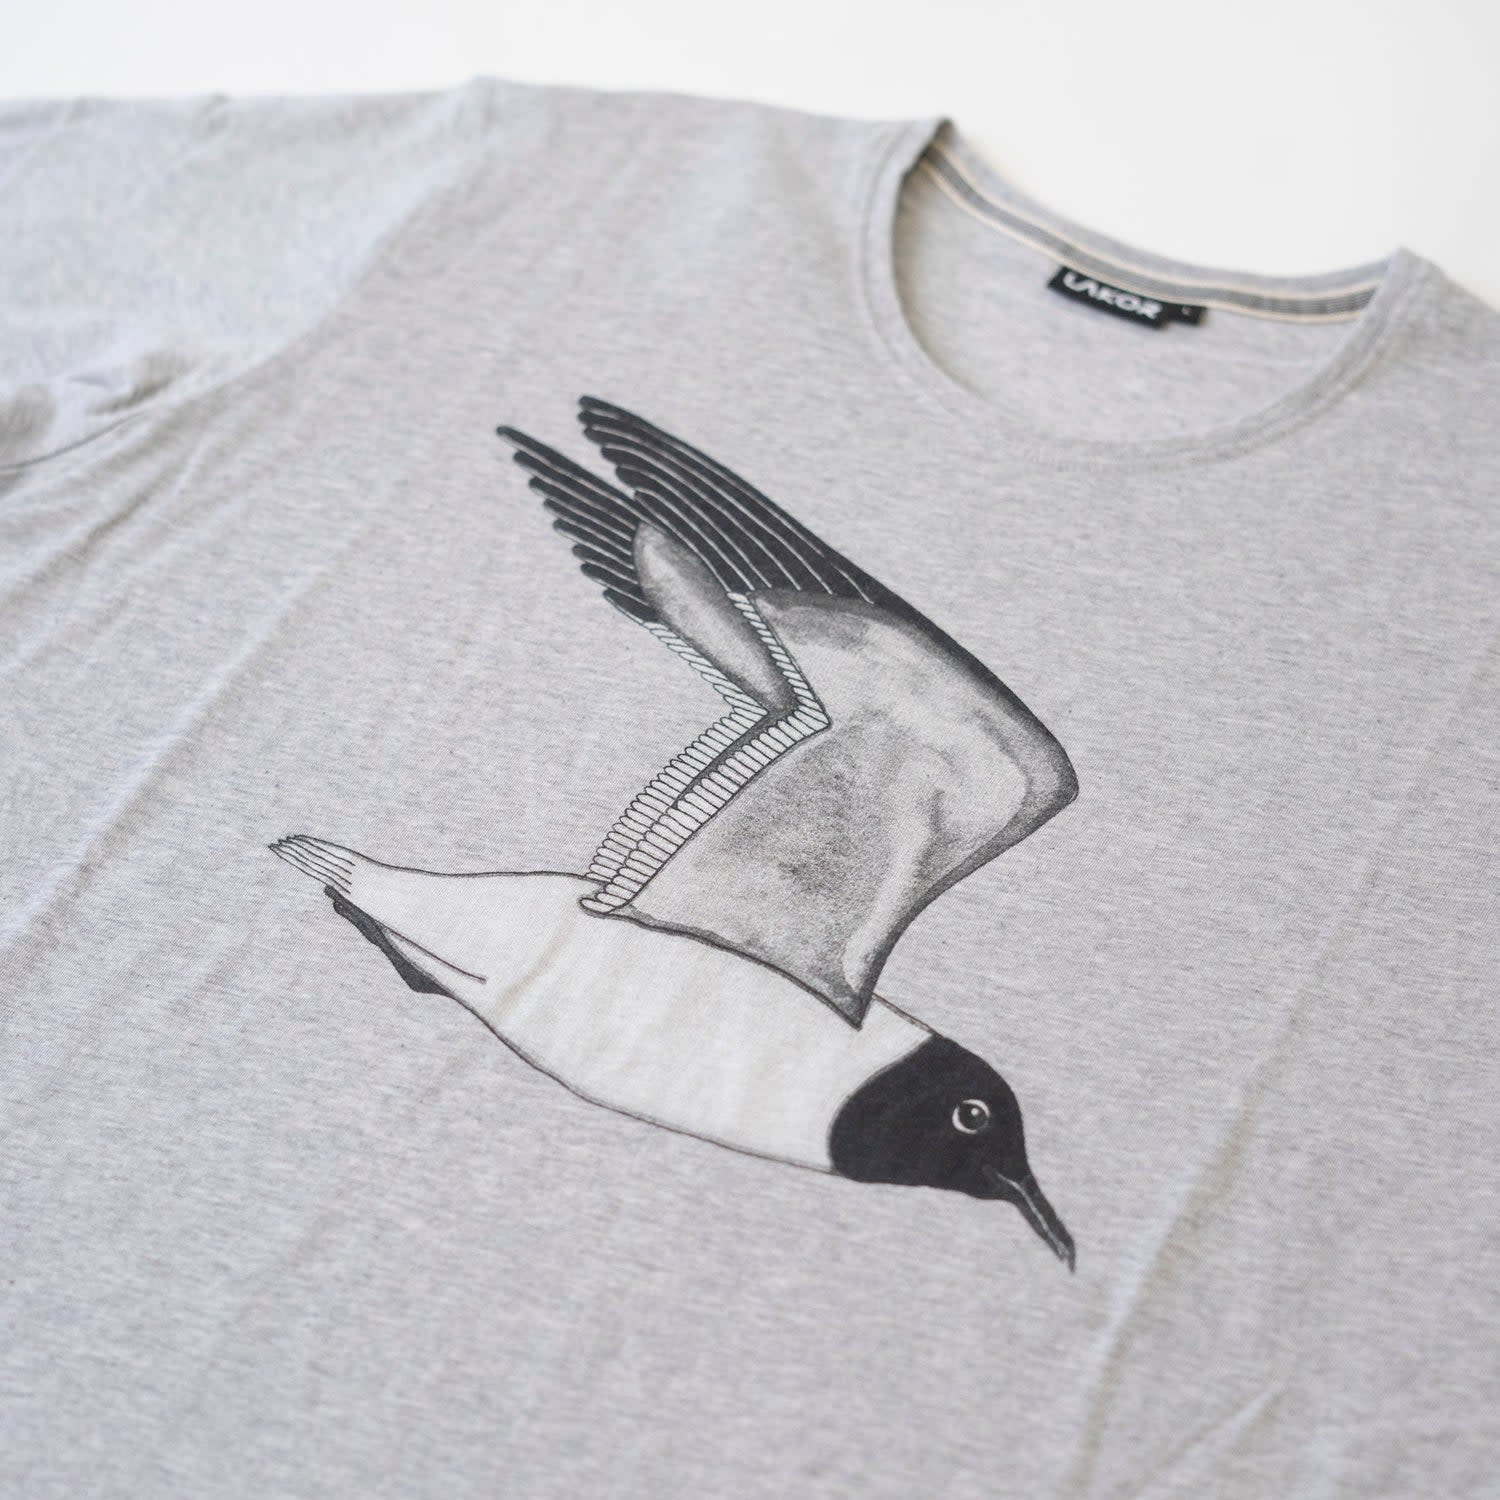 Lakor Lakor, T-Shirt Hooded Seagull, light grey, XL